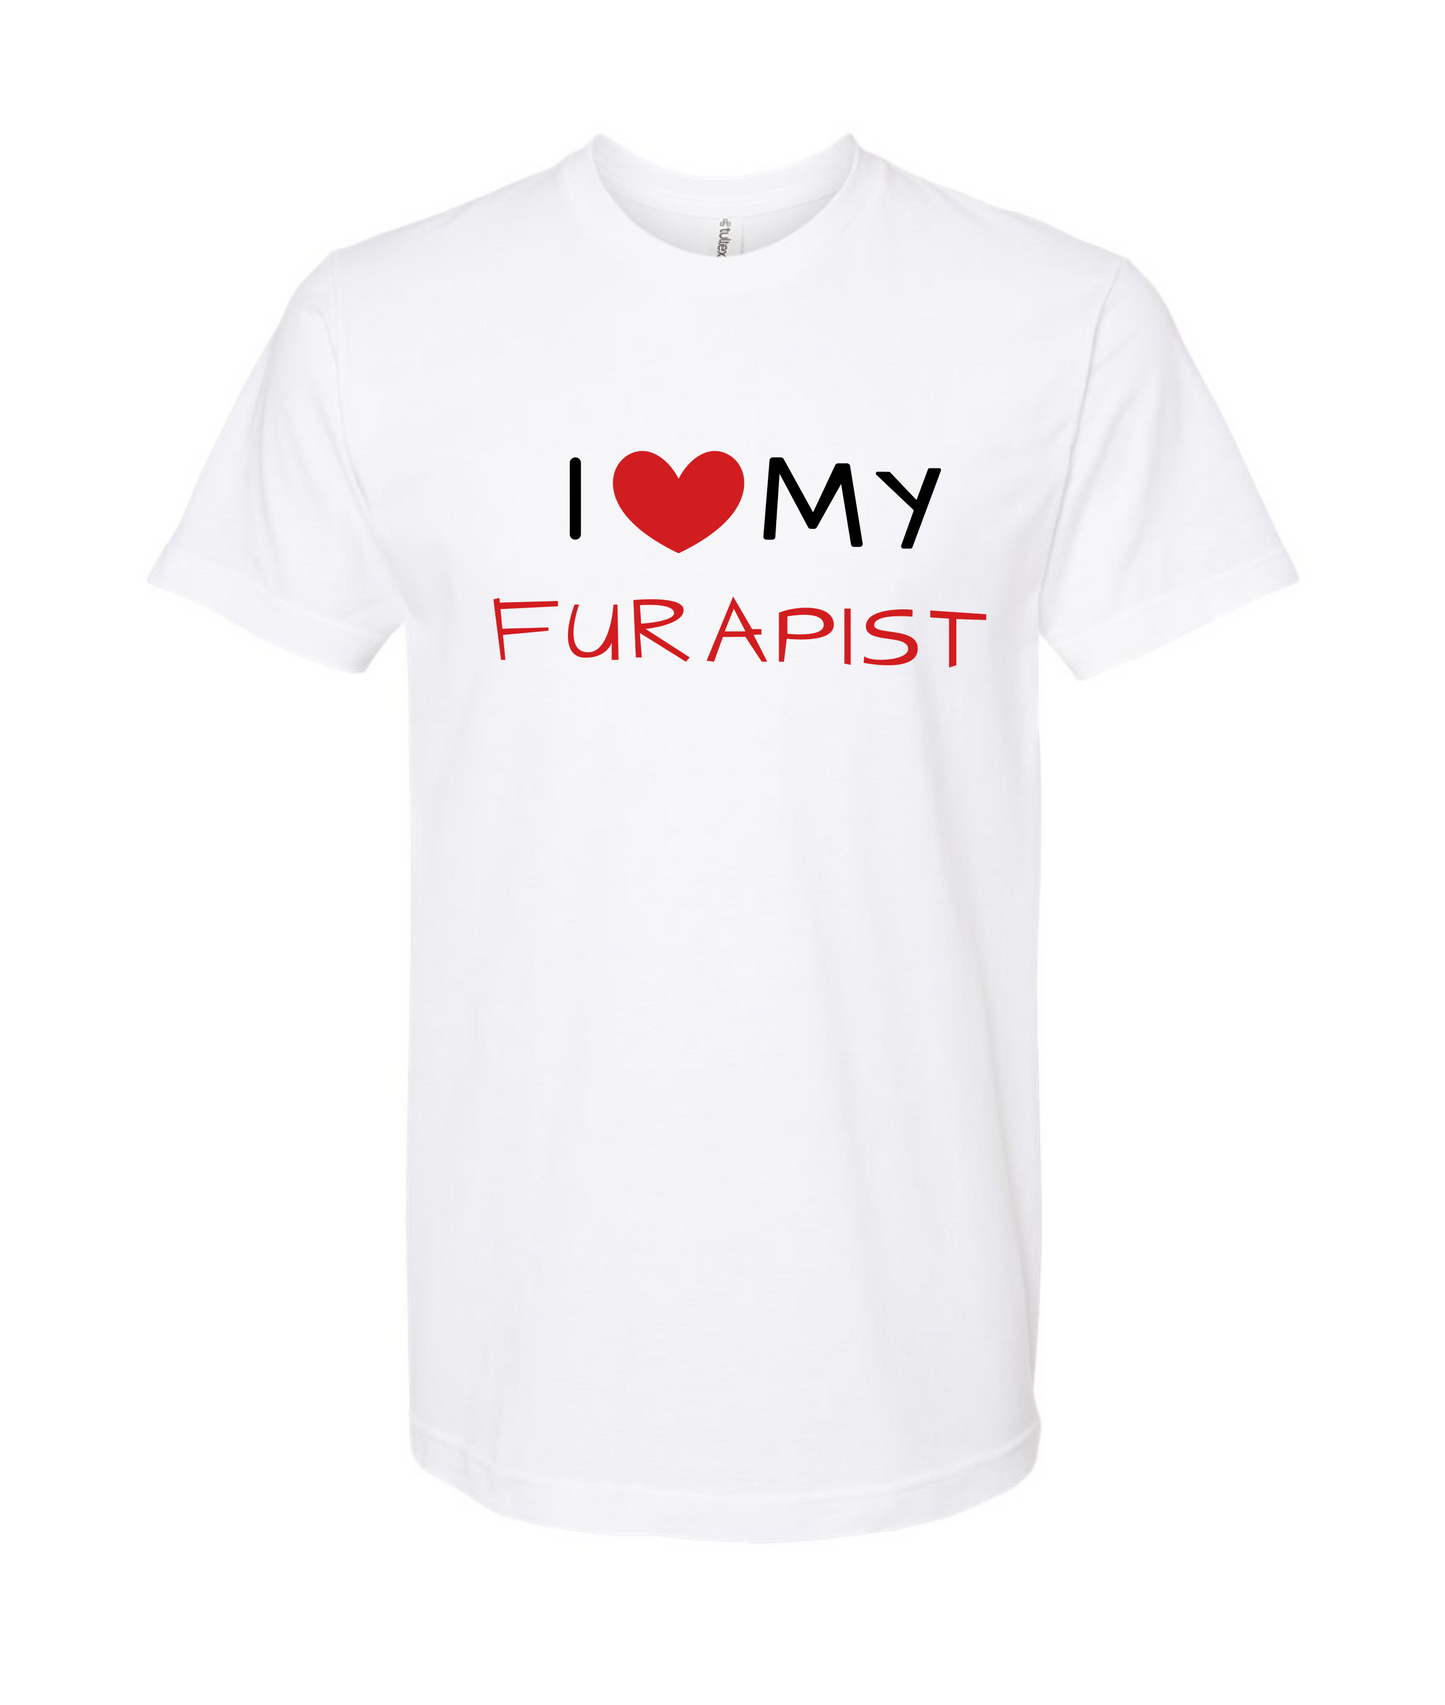 pyschofurapy.com - I <3 MY FURAPIST - White T-Shirt